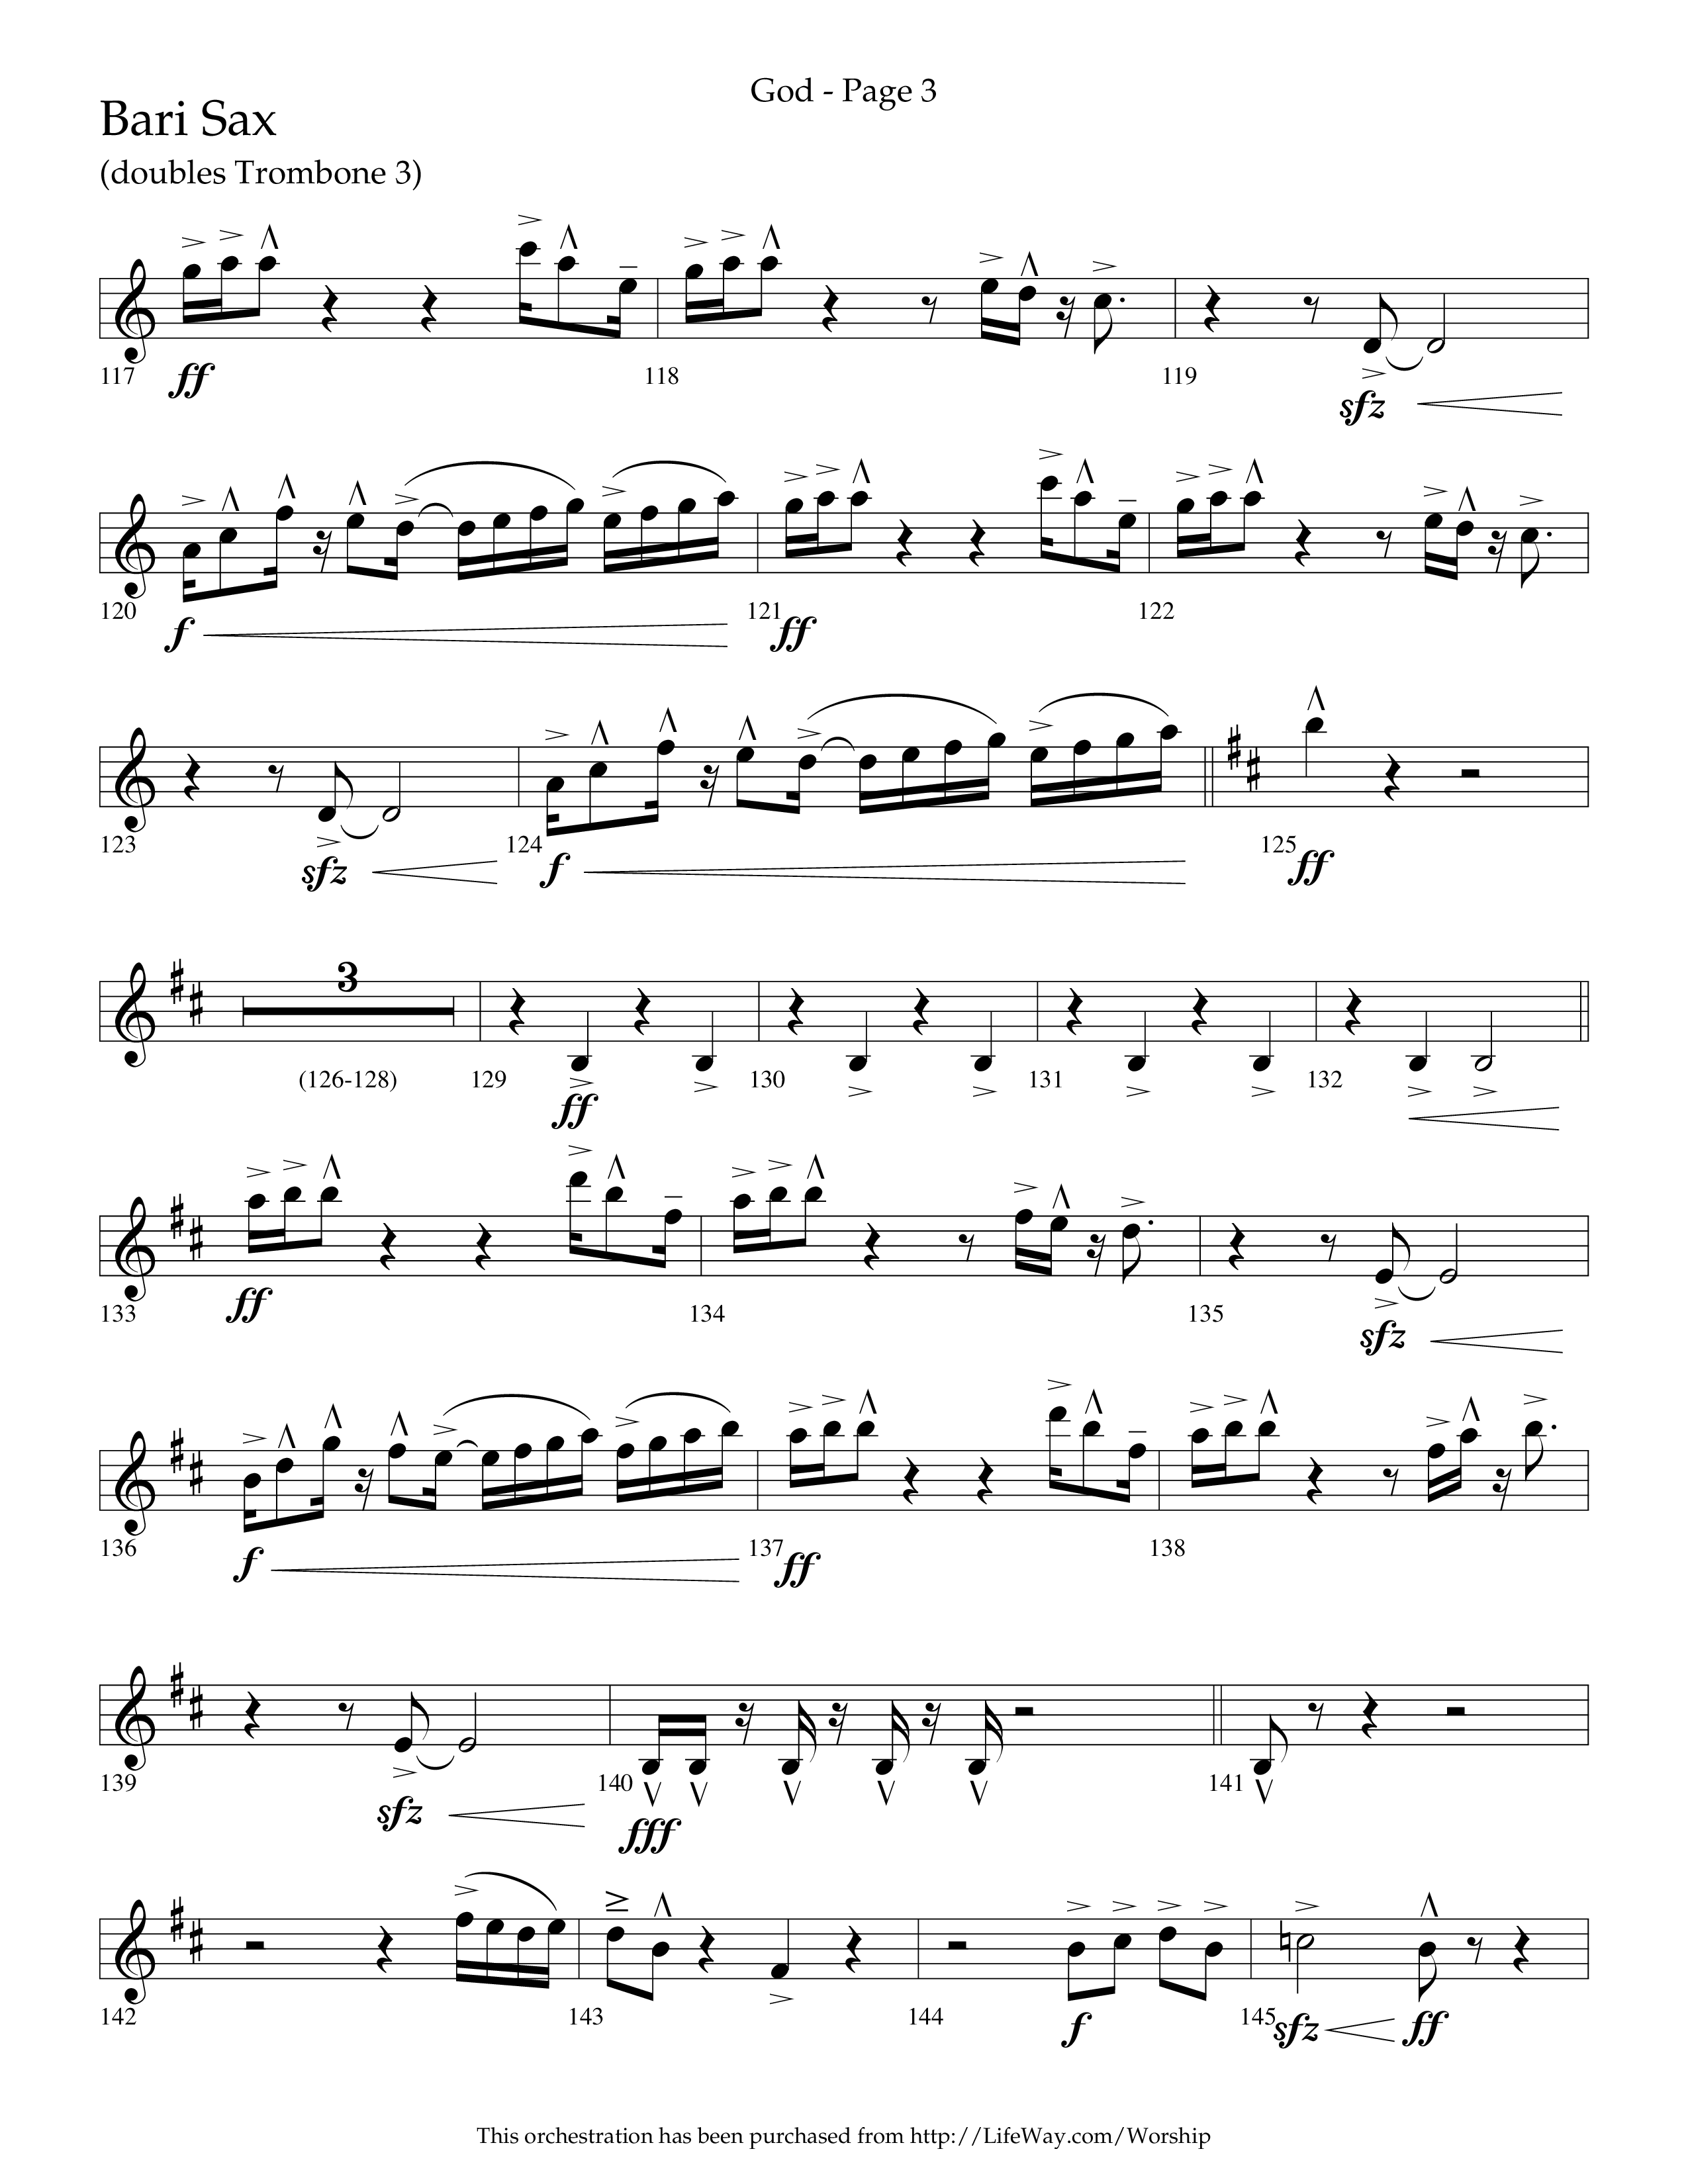 God (Choral Anthem SATB) Bari Sax (Lifeway Choral / Arr. Cliff Duren)